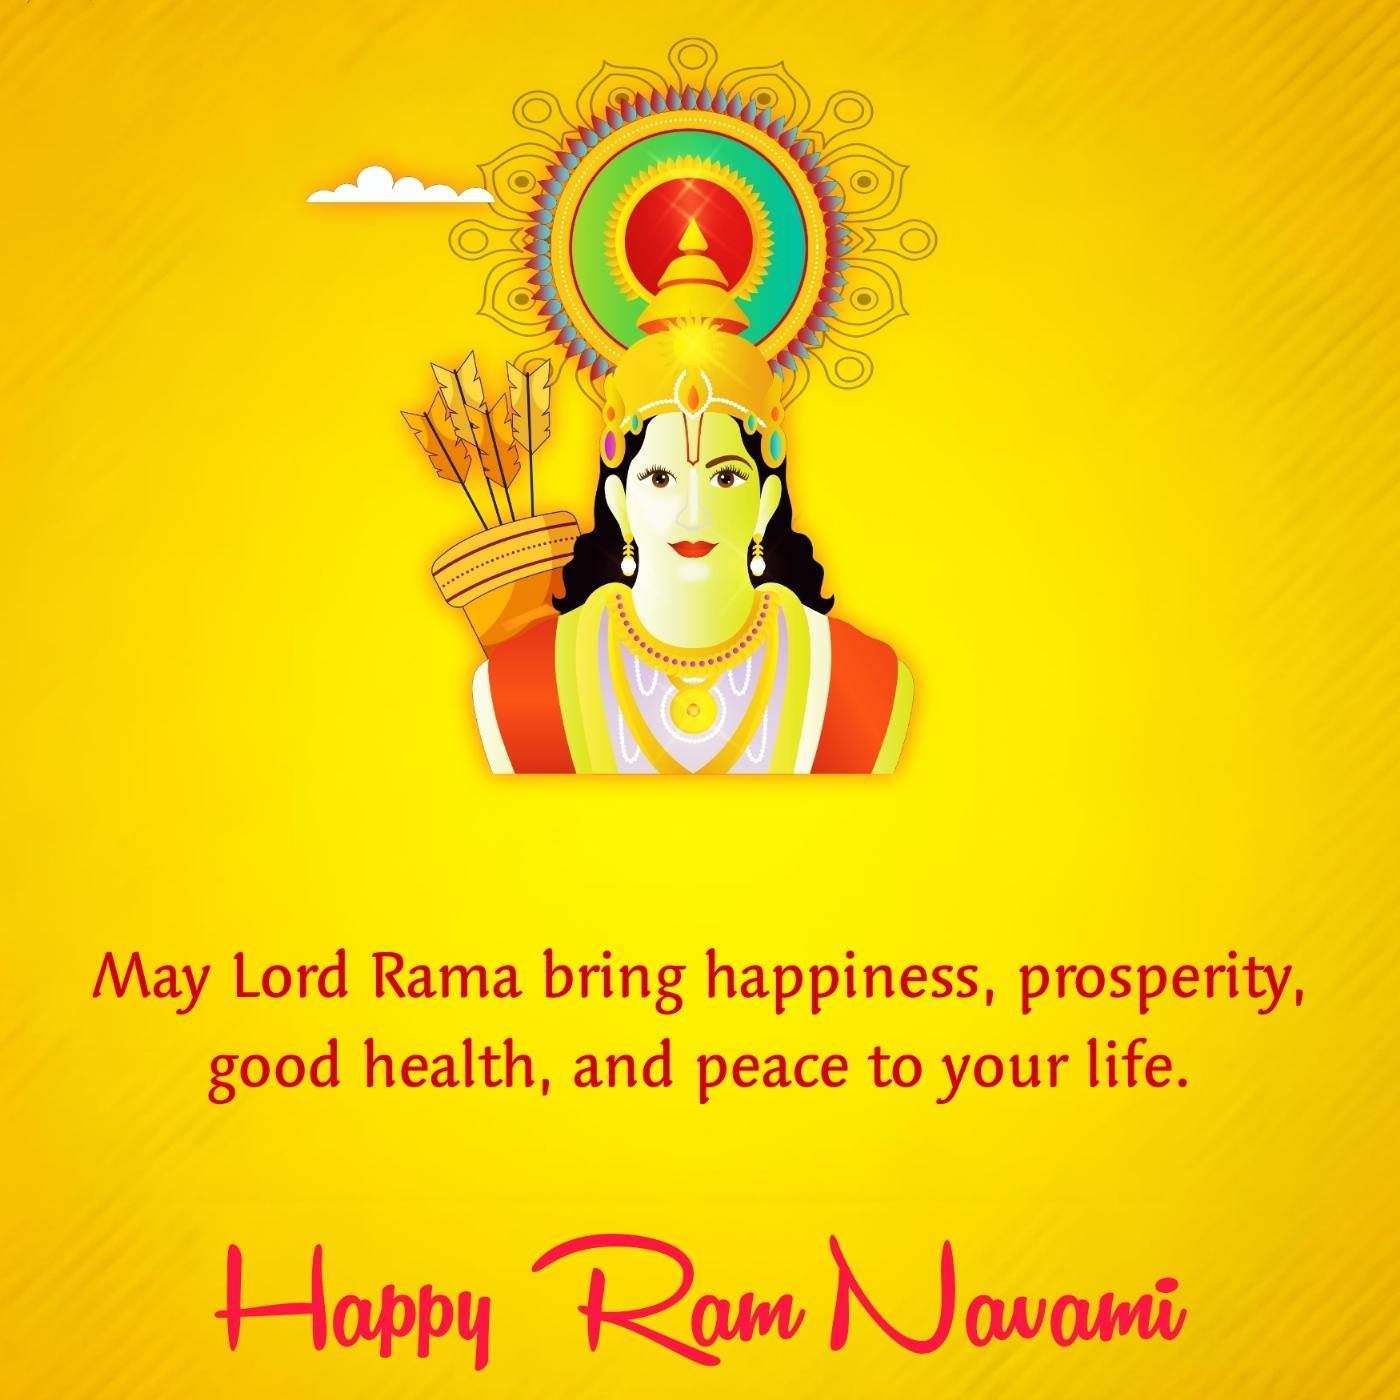 May Lord Rama bring happiness prosperity good health